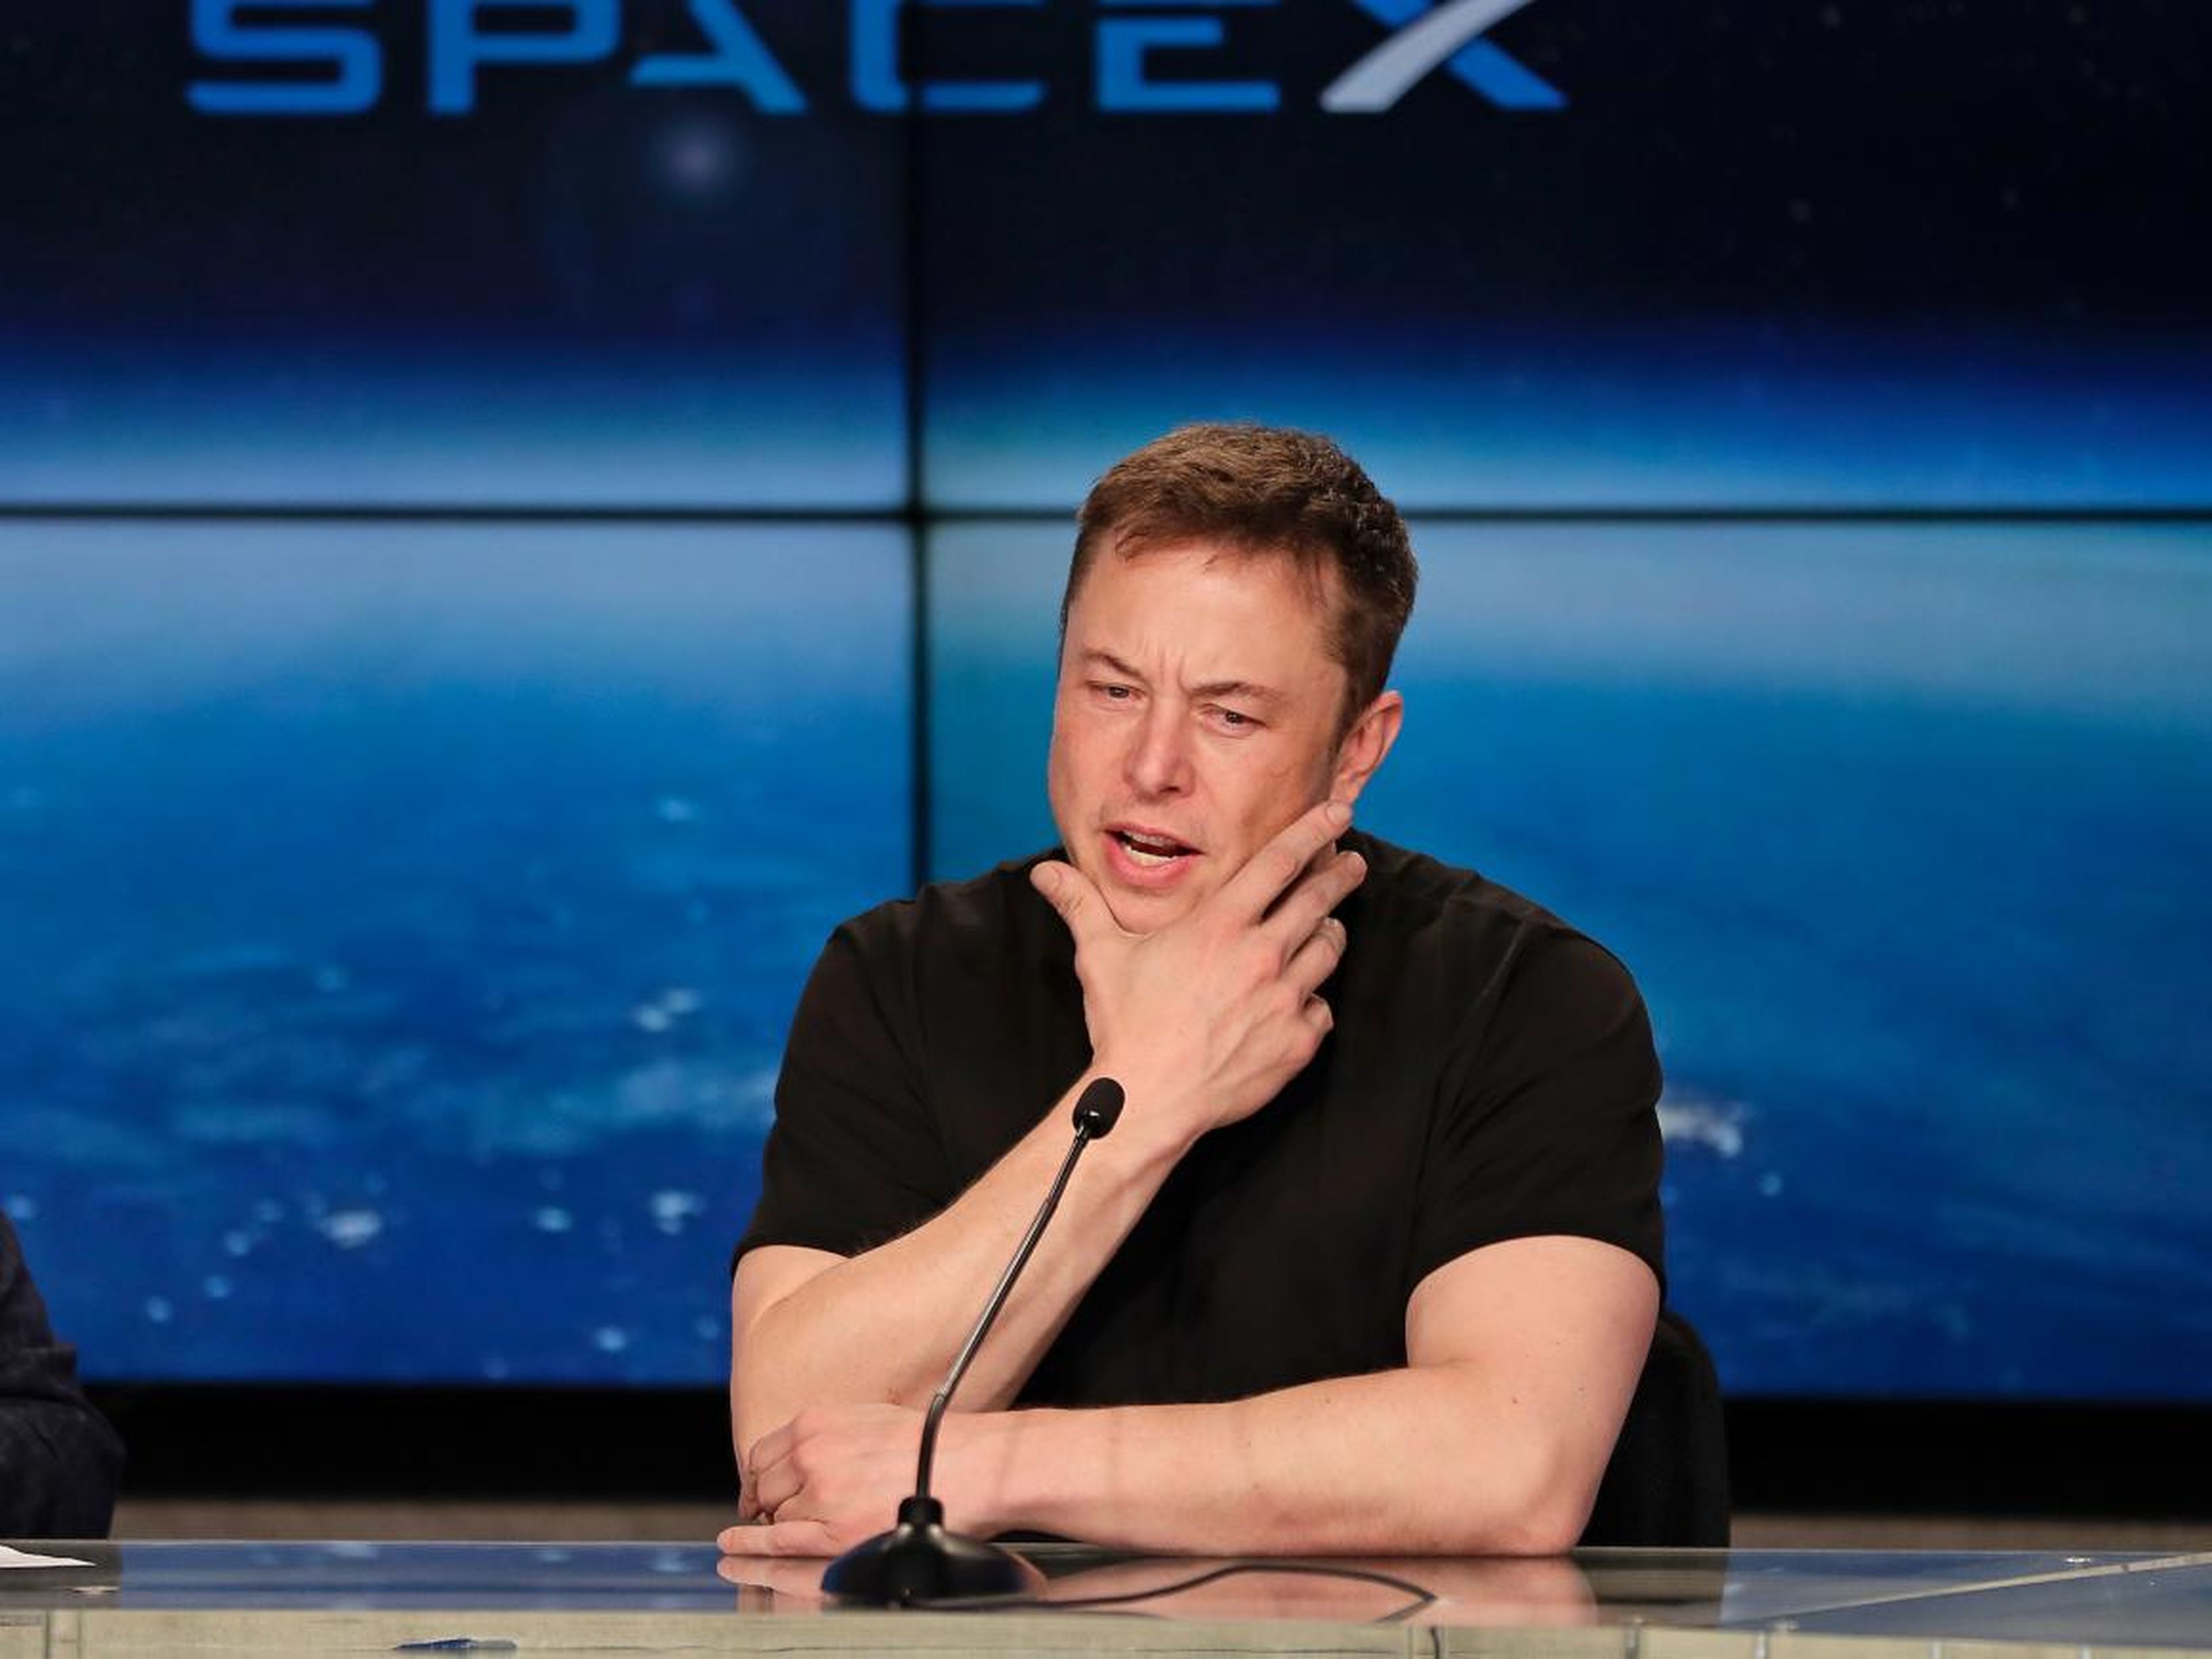 Elon Musk probably needs to take a break.